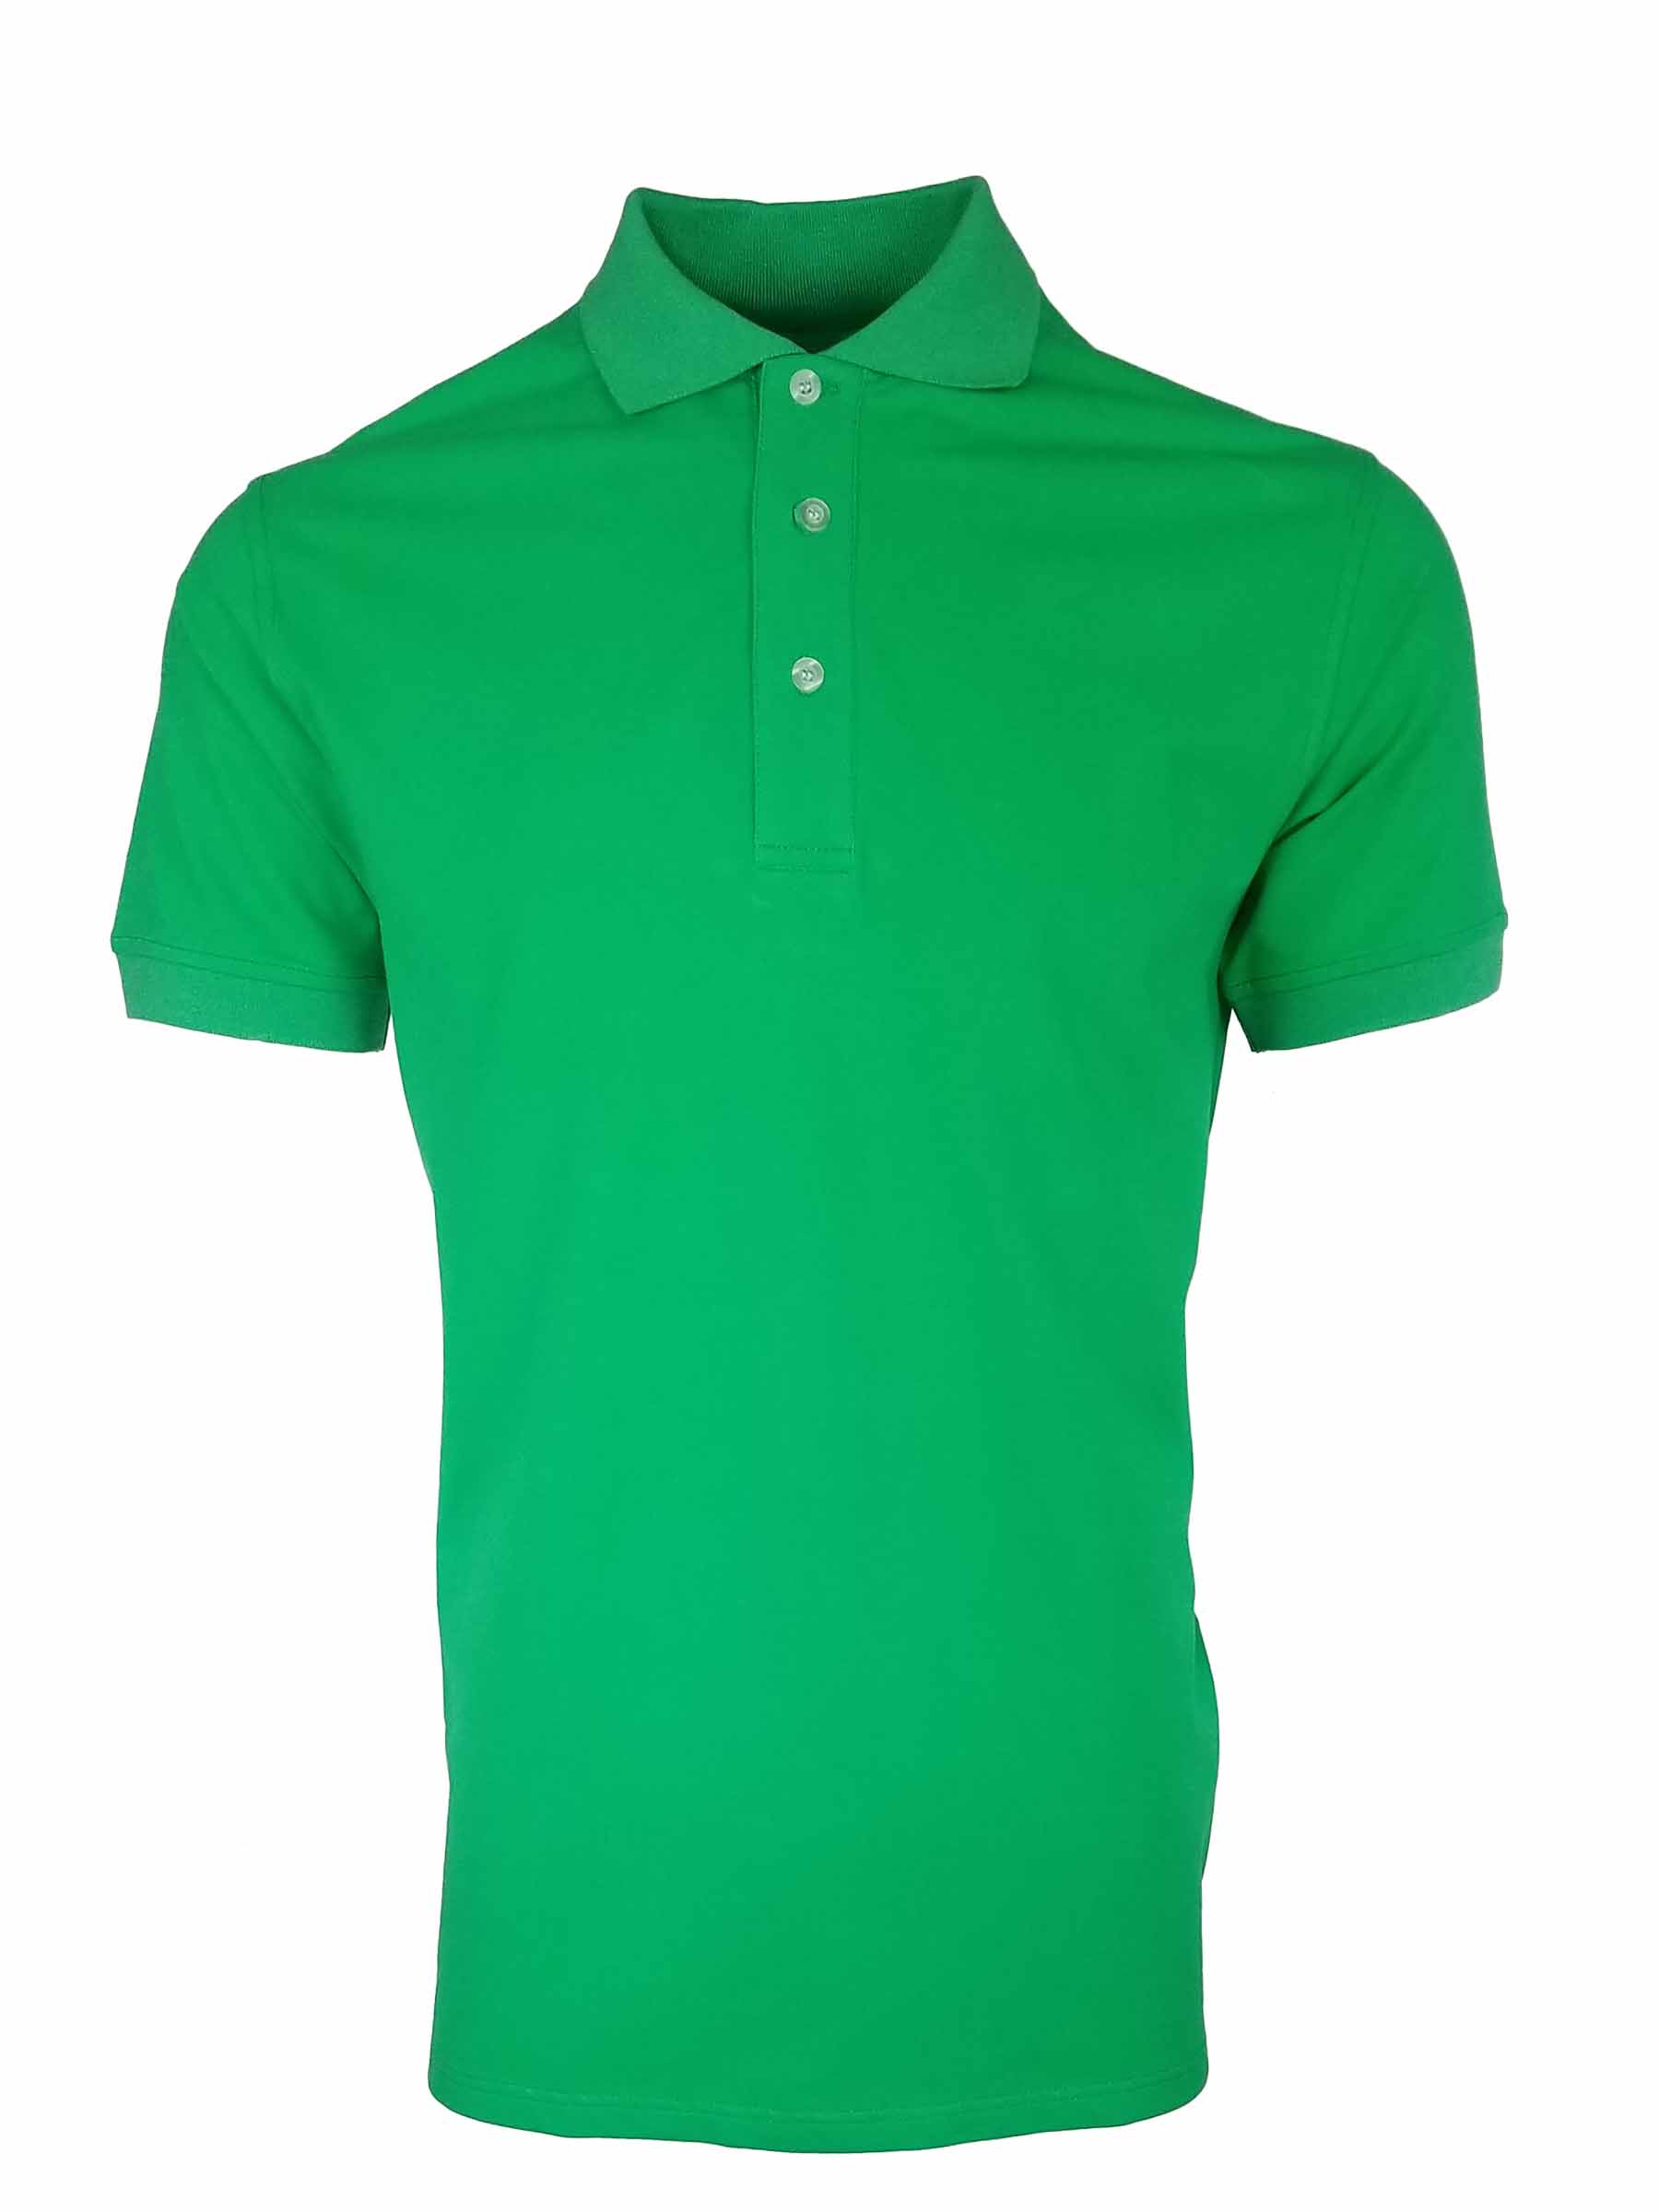 Men's All Occasion Pique Polo - Emerald - Uniform Edit